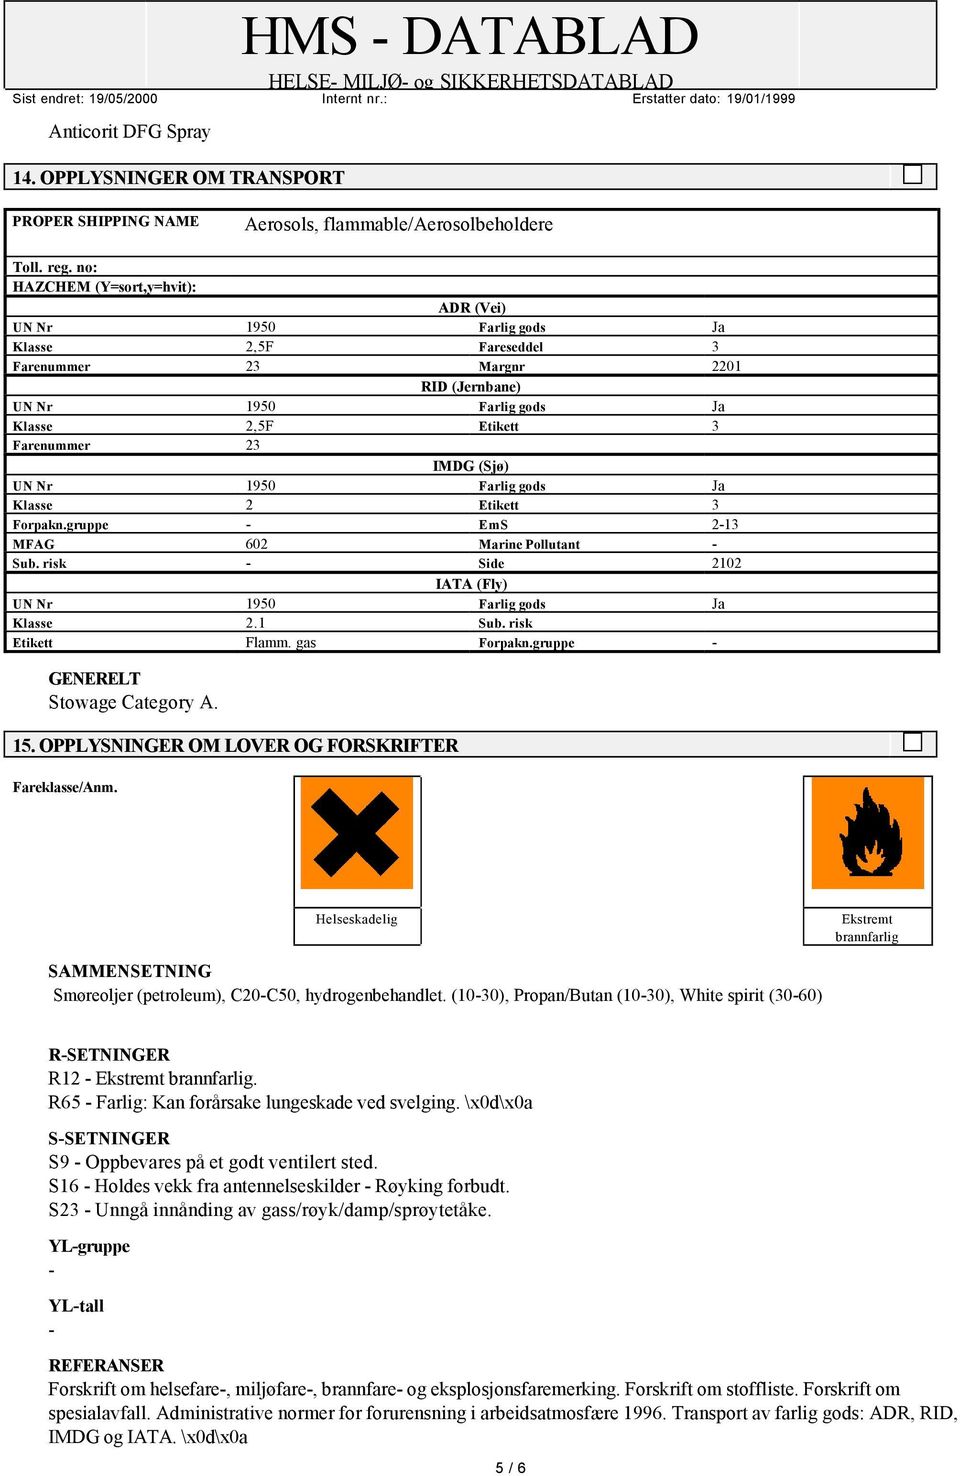 gruppe EmS 213 MFAG 602 Marine Pollutant Sub. risk Side 2102 IATA (Fly) Klasse 2.1 Sub. risk Etikett Flamm. gas Forpakn.gruppe GENERELT Stowage Category A. 15.